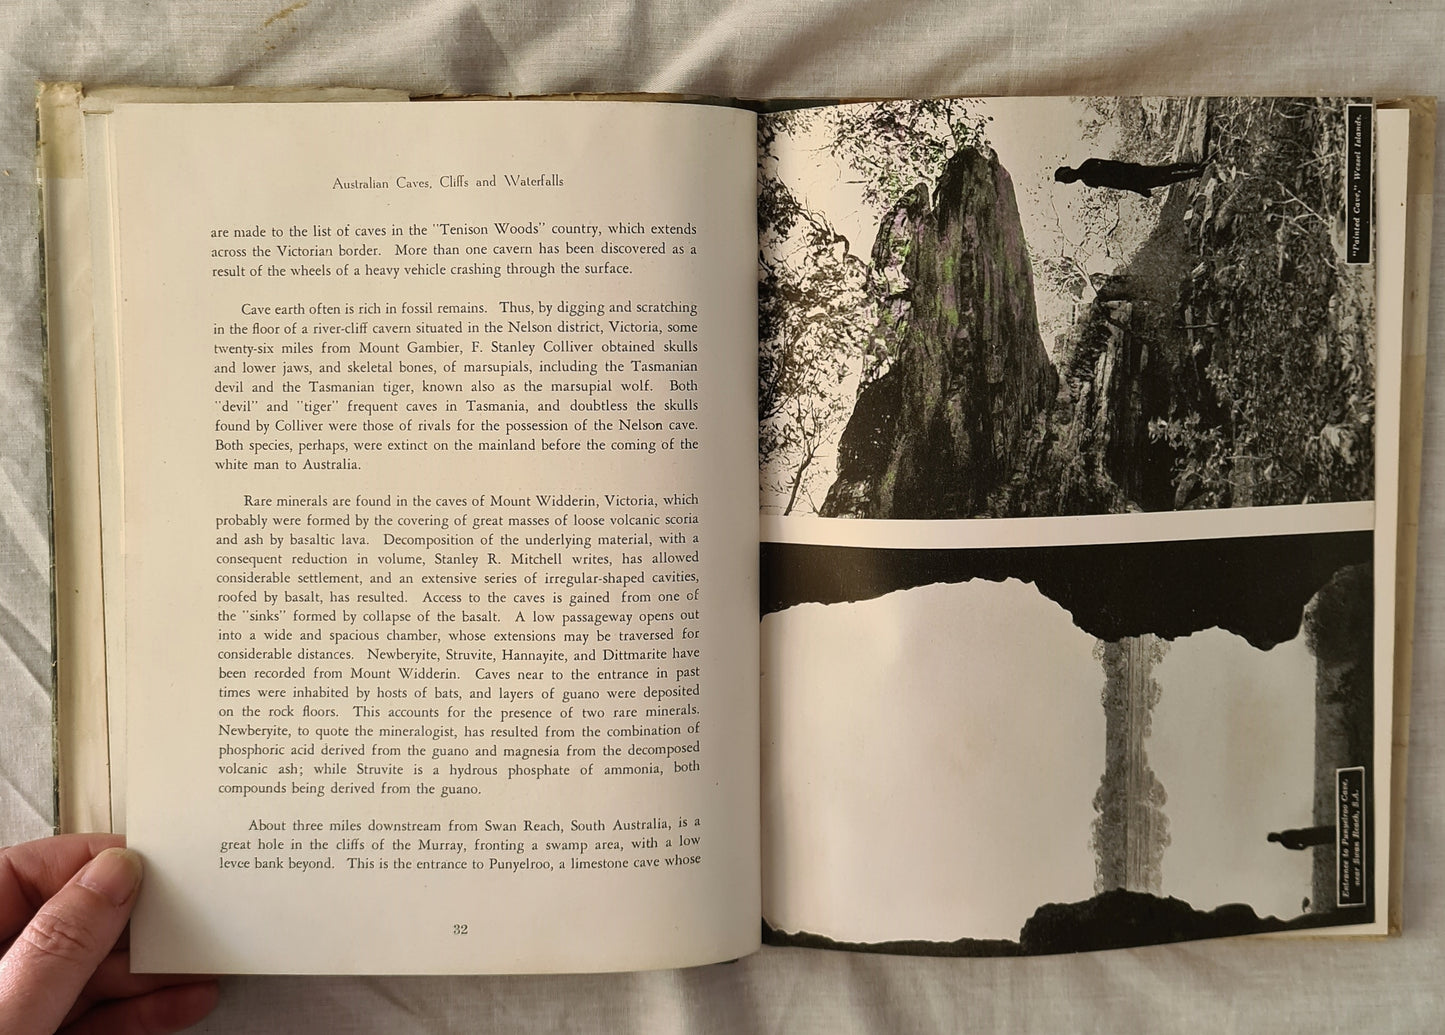 Australian Caves Cliffs and Waterfalls by Charles Barrett